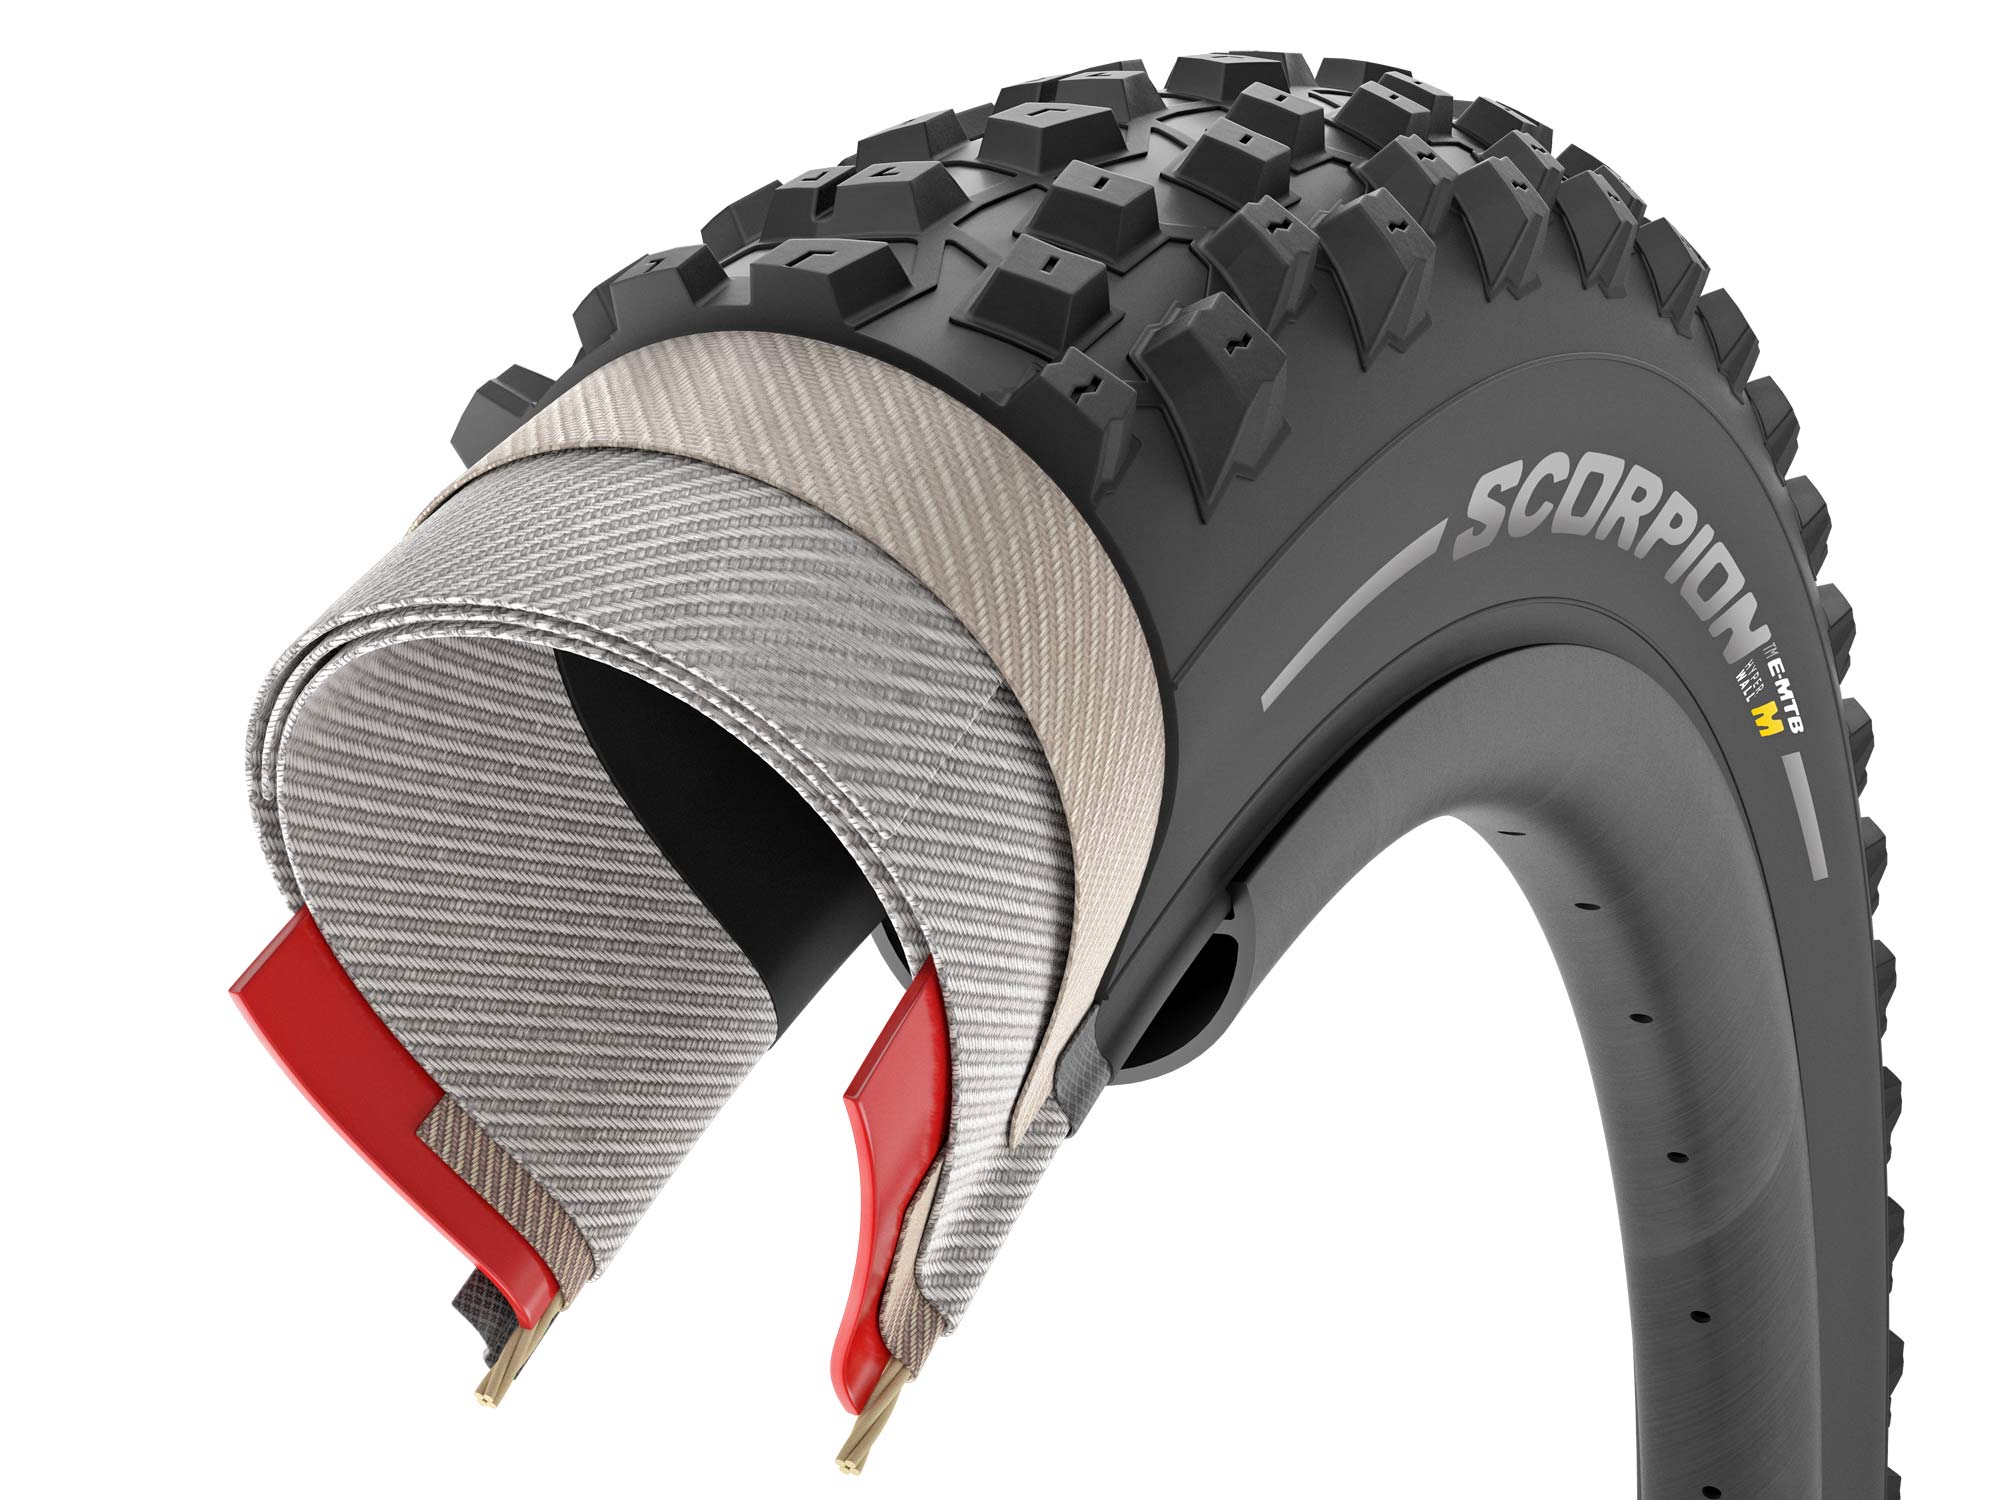 2020 Pirelli Scorpion E-MTB trail & gravity-ready e-bike tires